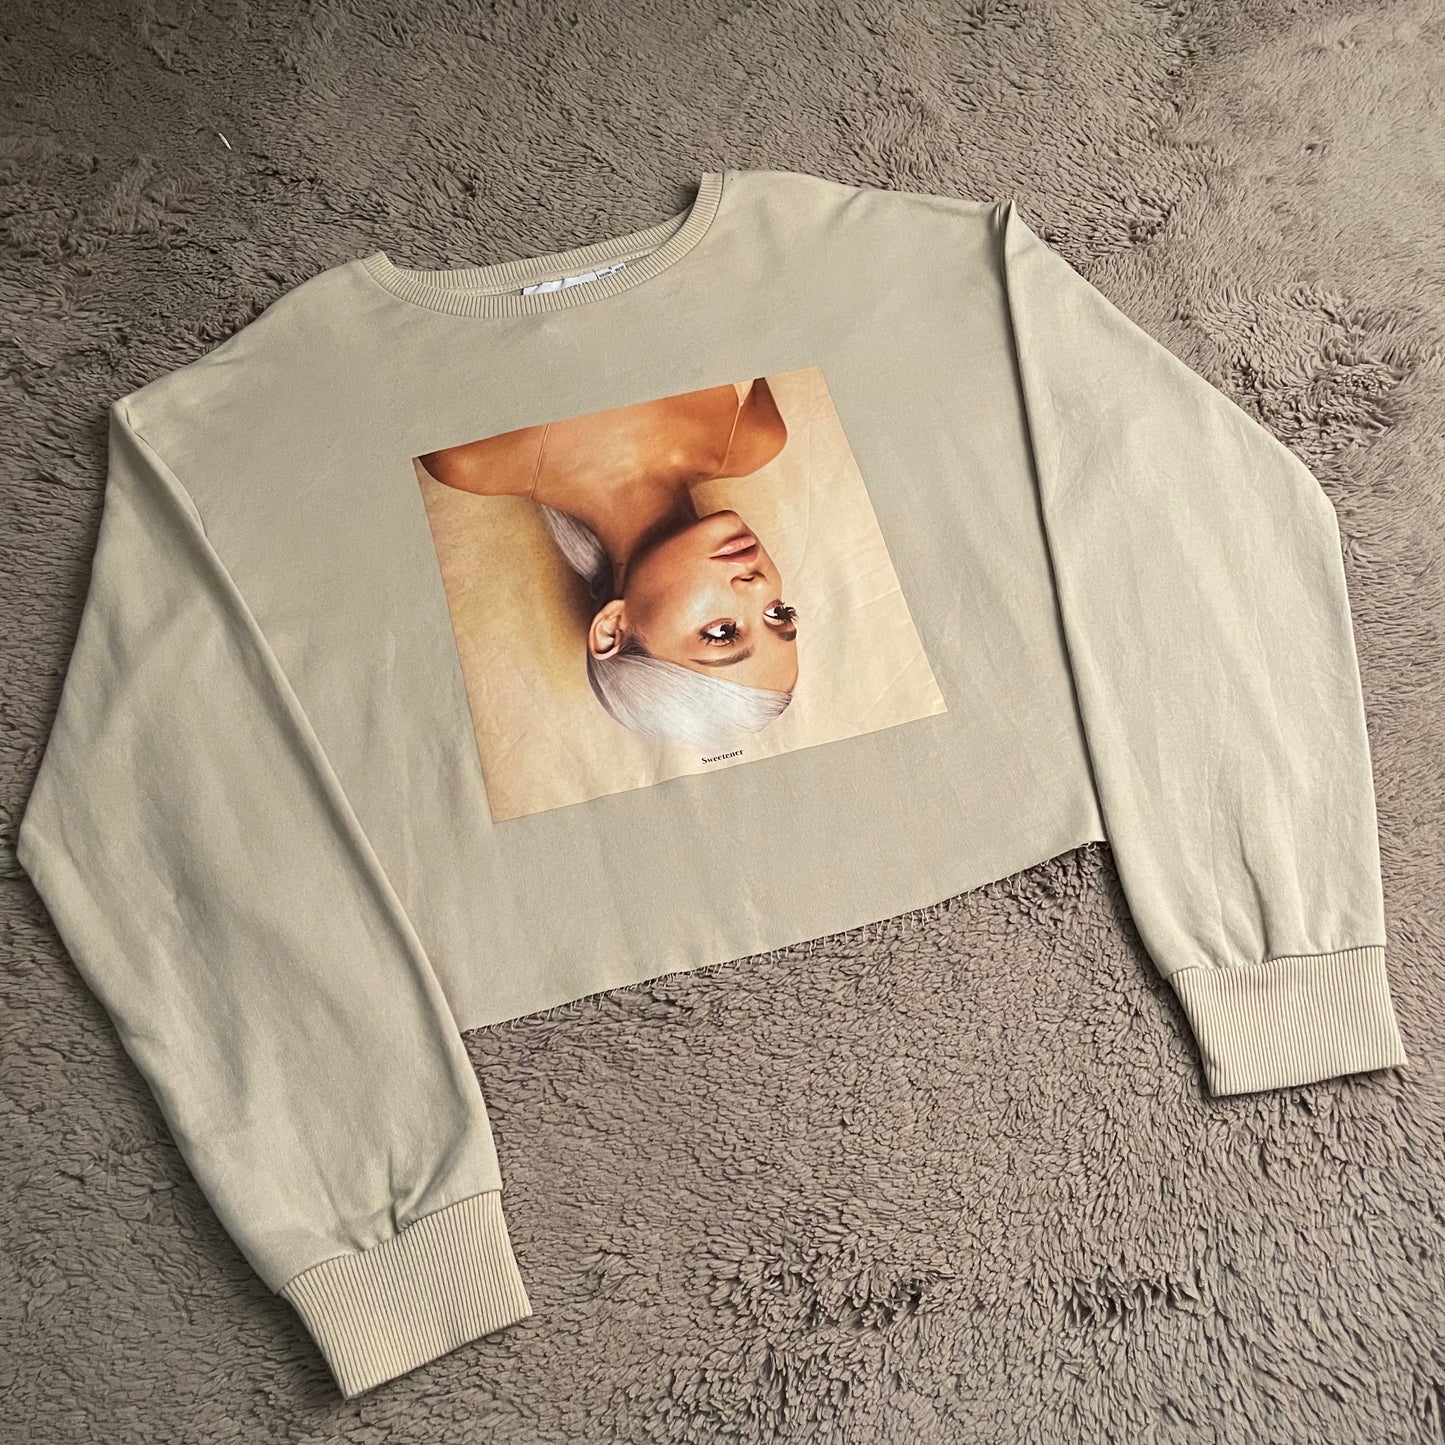 Ariana Grande 2018 Sweetener 2018 Tour Cropped Long Sleeves (M)